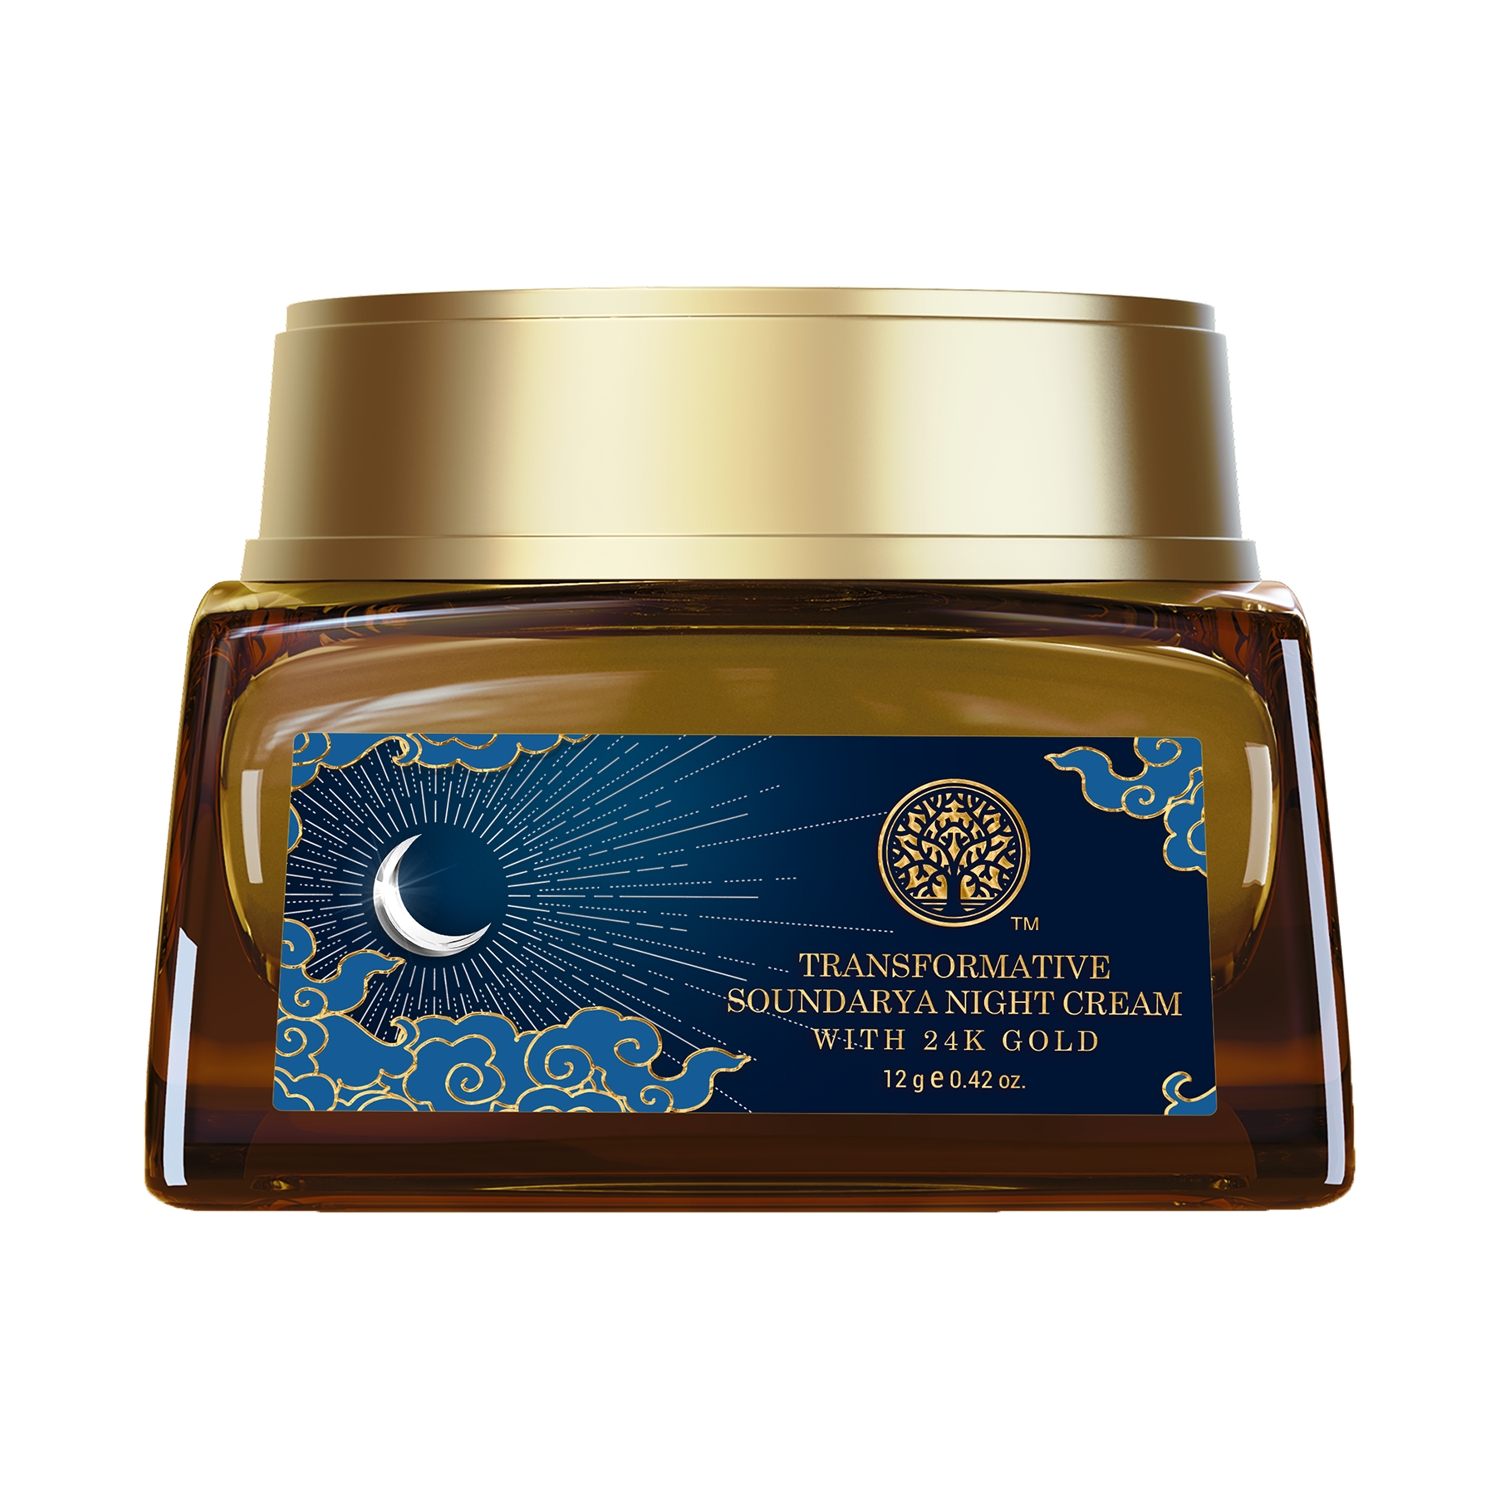 Soundarya Radiance Cream With 24K Gold SPF25 (50g)